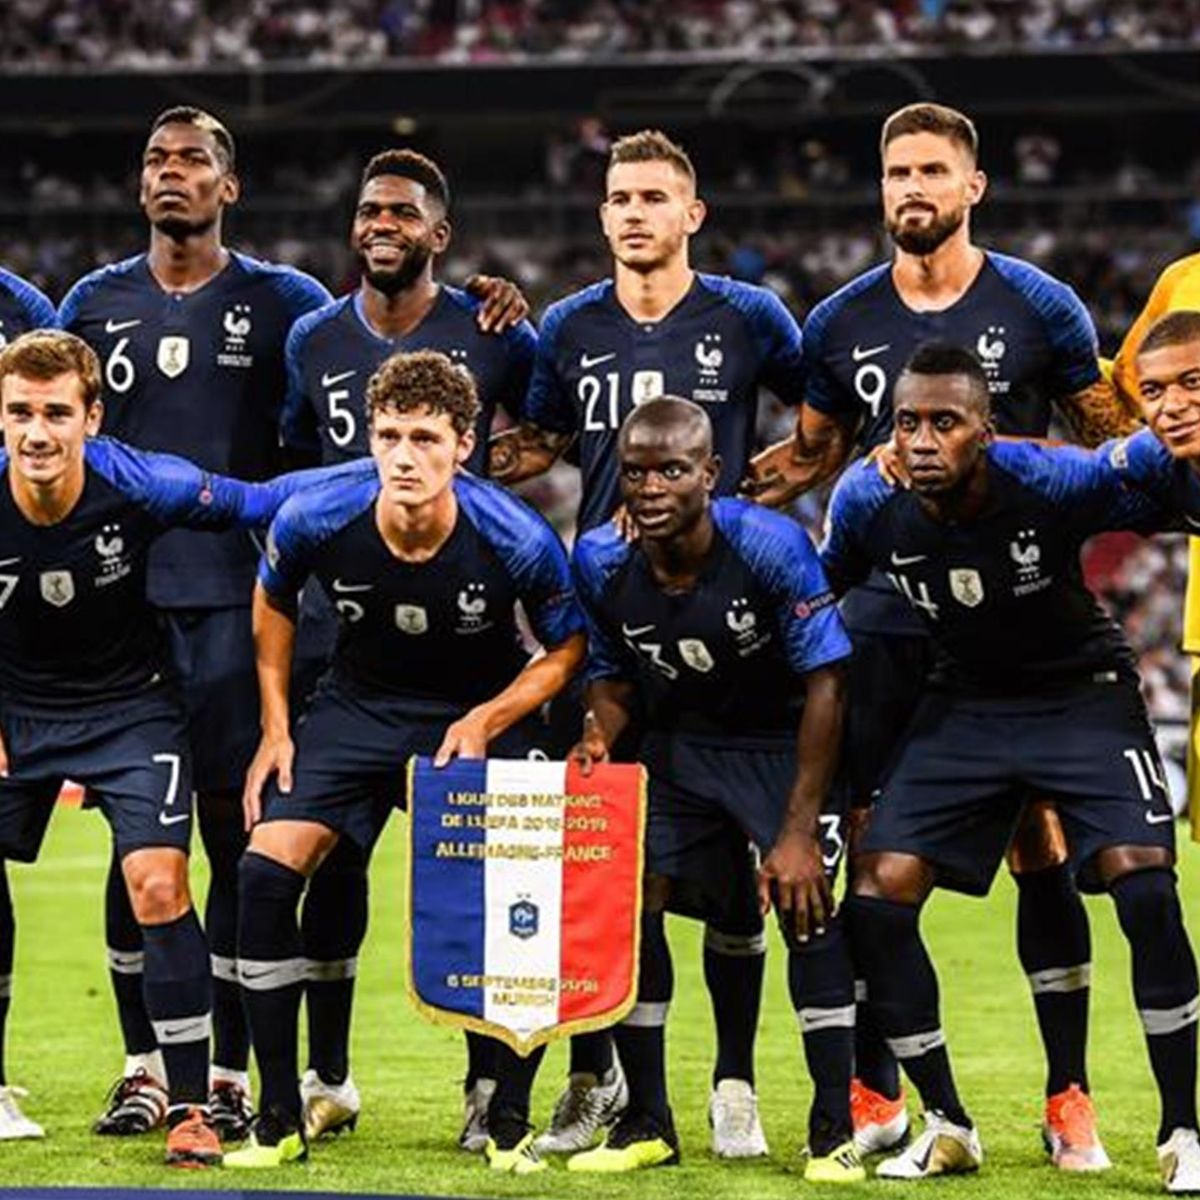 La odisea regalar la camiseta de la francesa dos estrellas - Eurosport